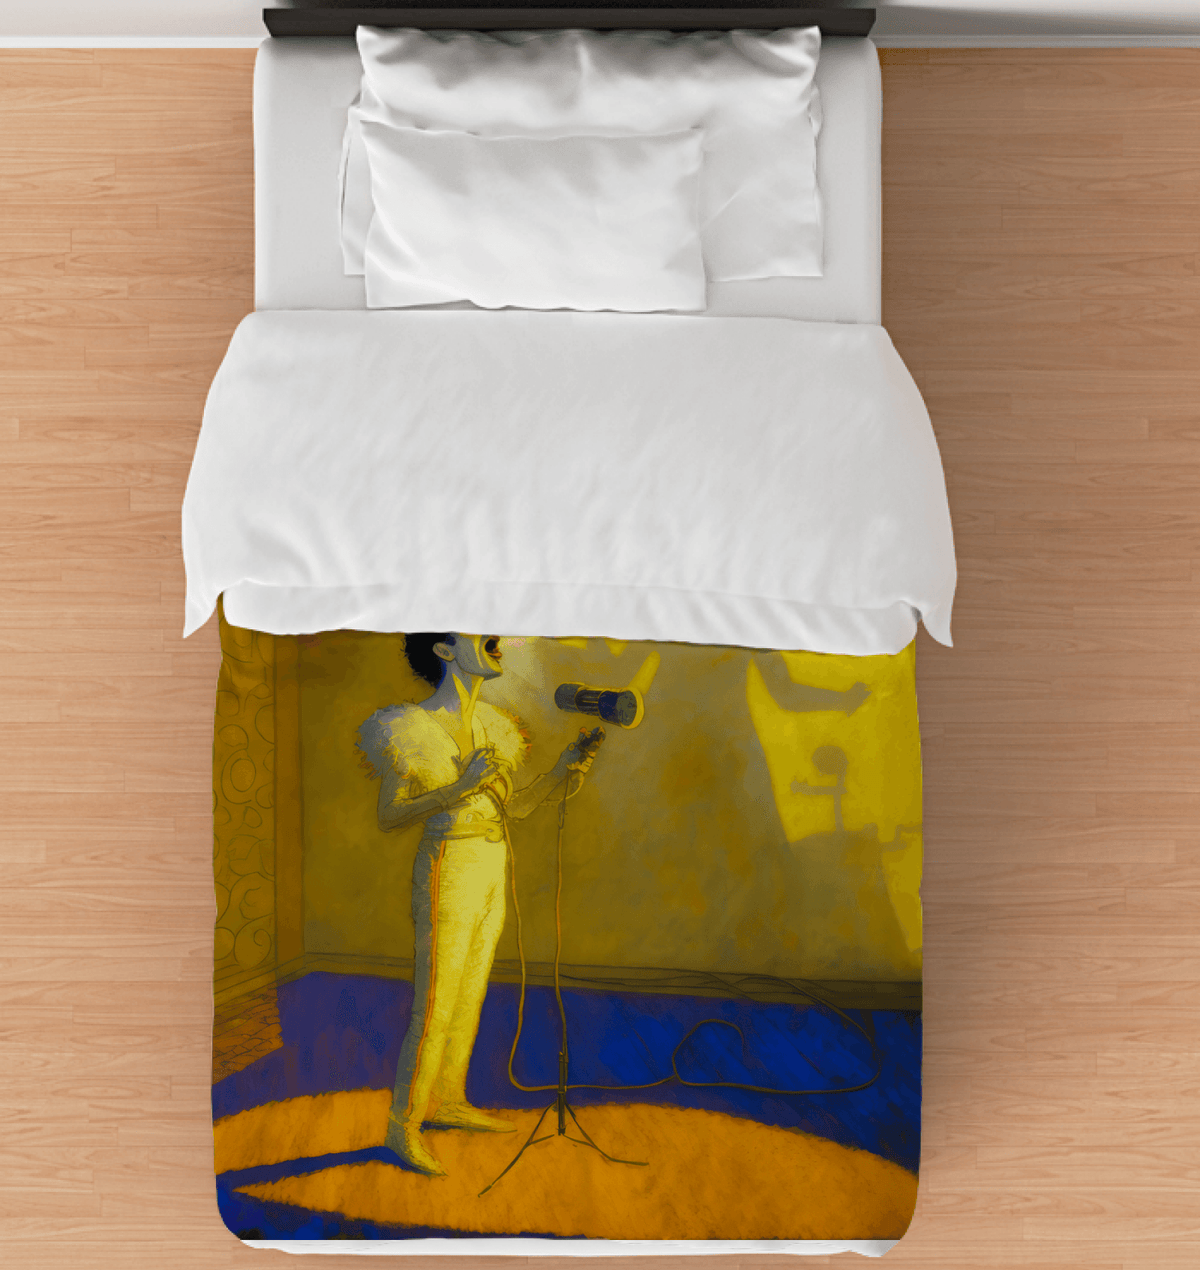 SurArt 101 Comforter - Twin - Beyond T-shirts